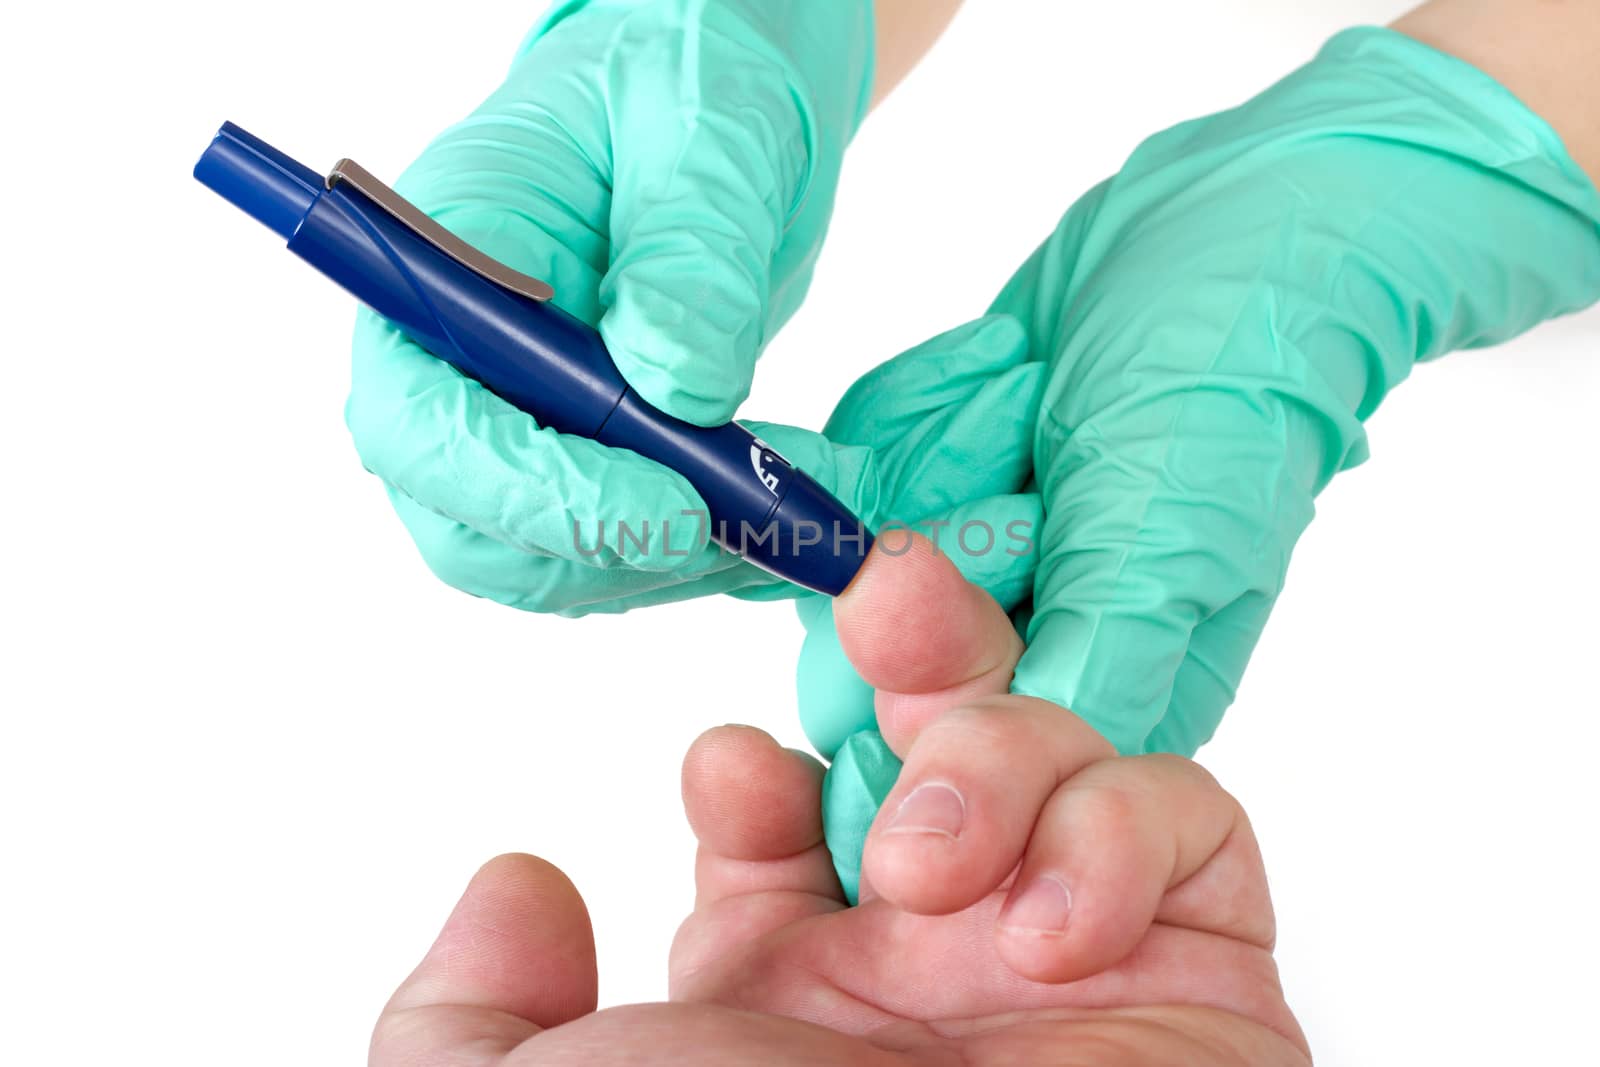 Lancet for piercing a finger at a diabetes